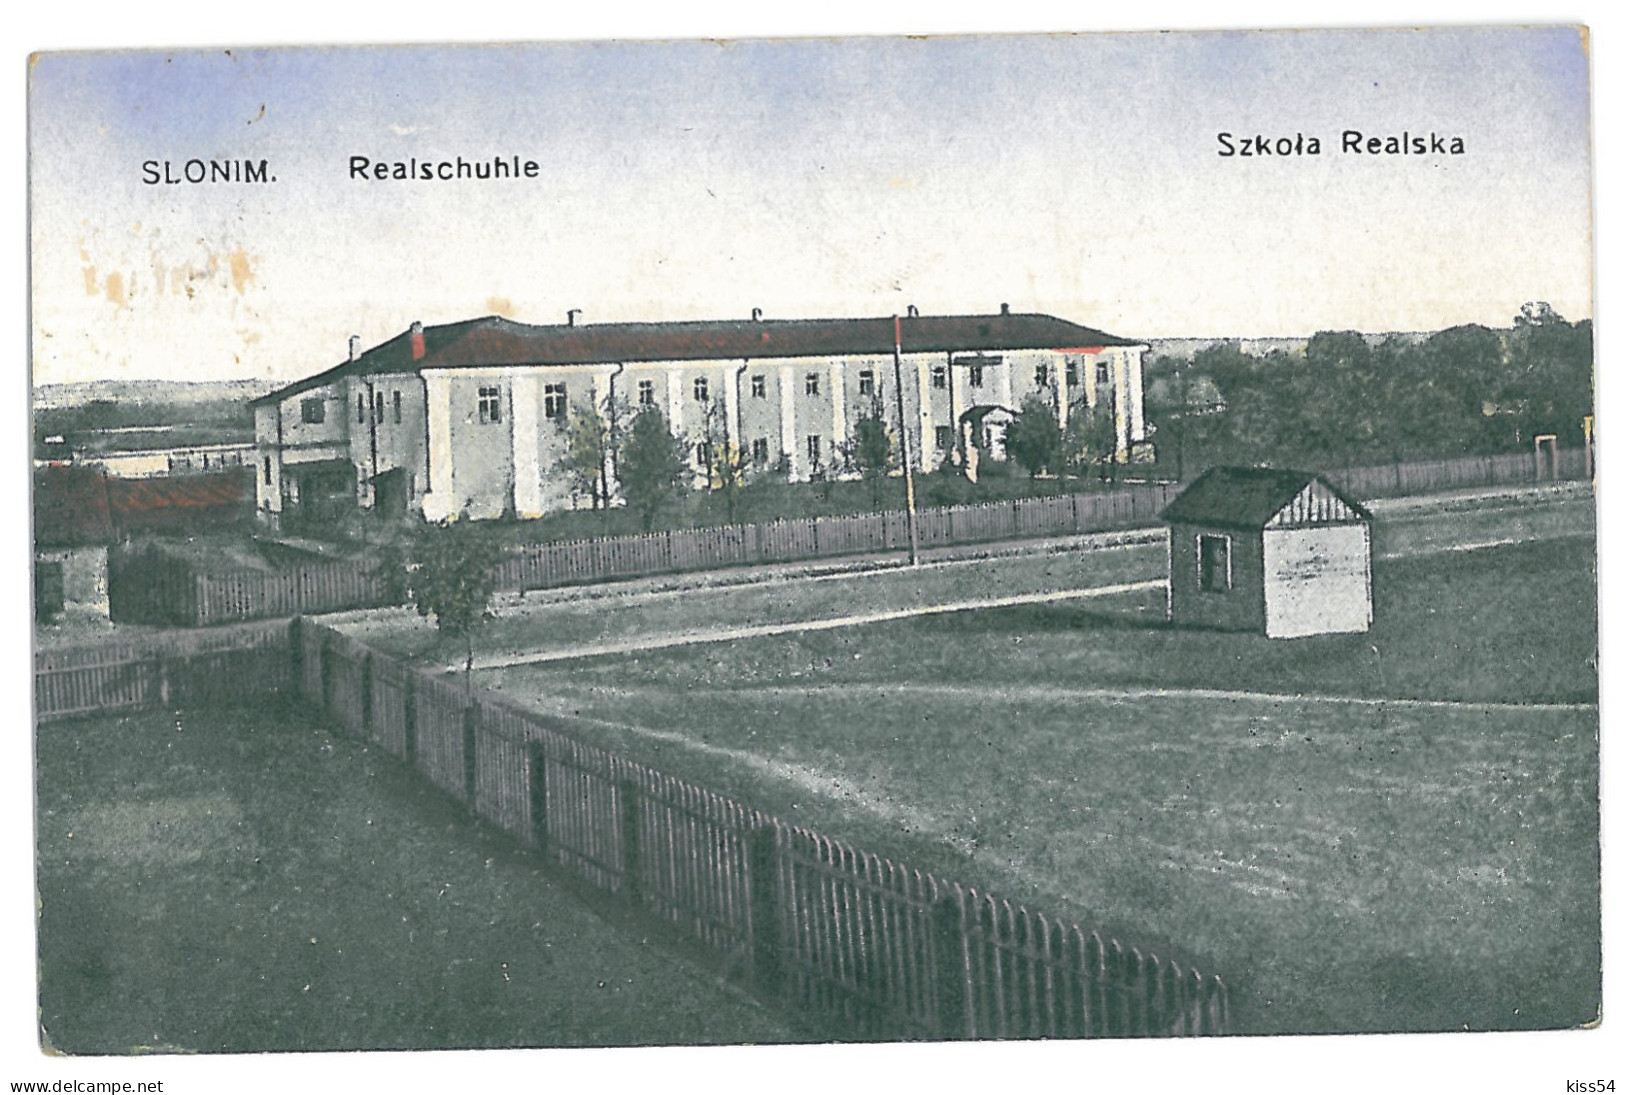 BL 28 - 13815 SLONIM, School, Belarus - Old Postcard, CENSOR - Used - 1916 - Belarus